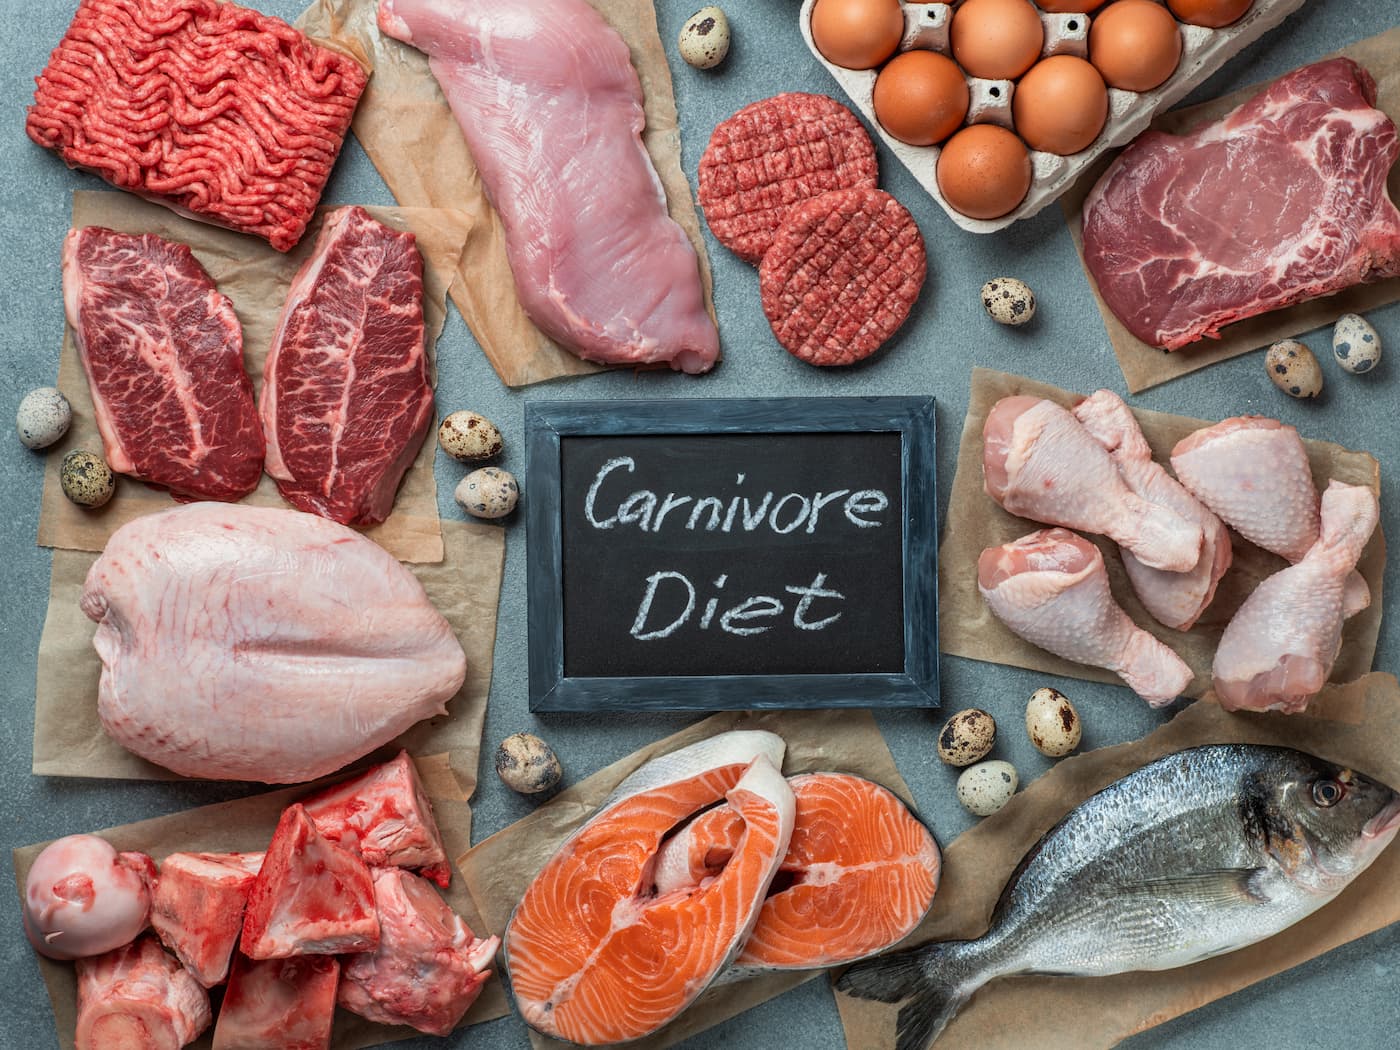 Carnivore Diet กินอย่างไร